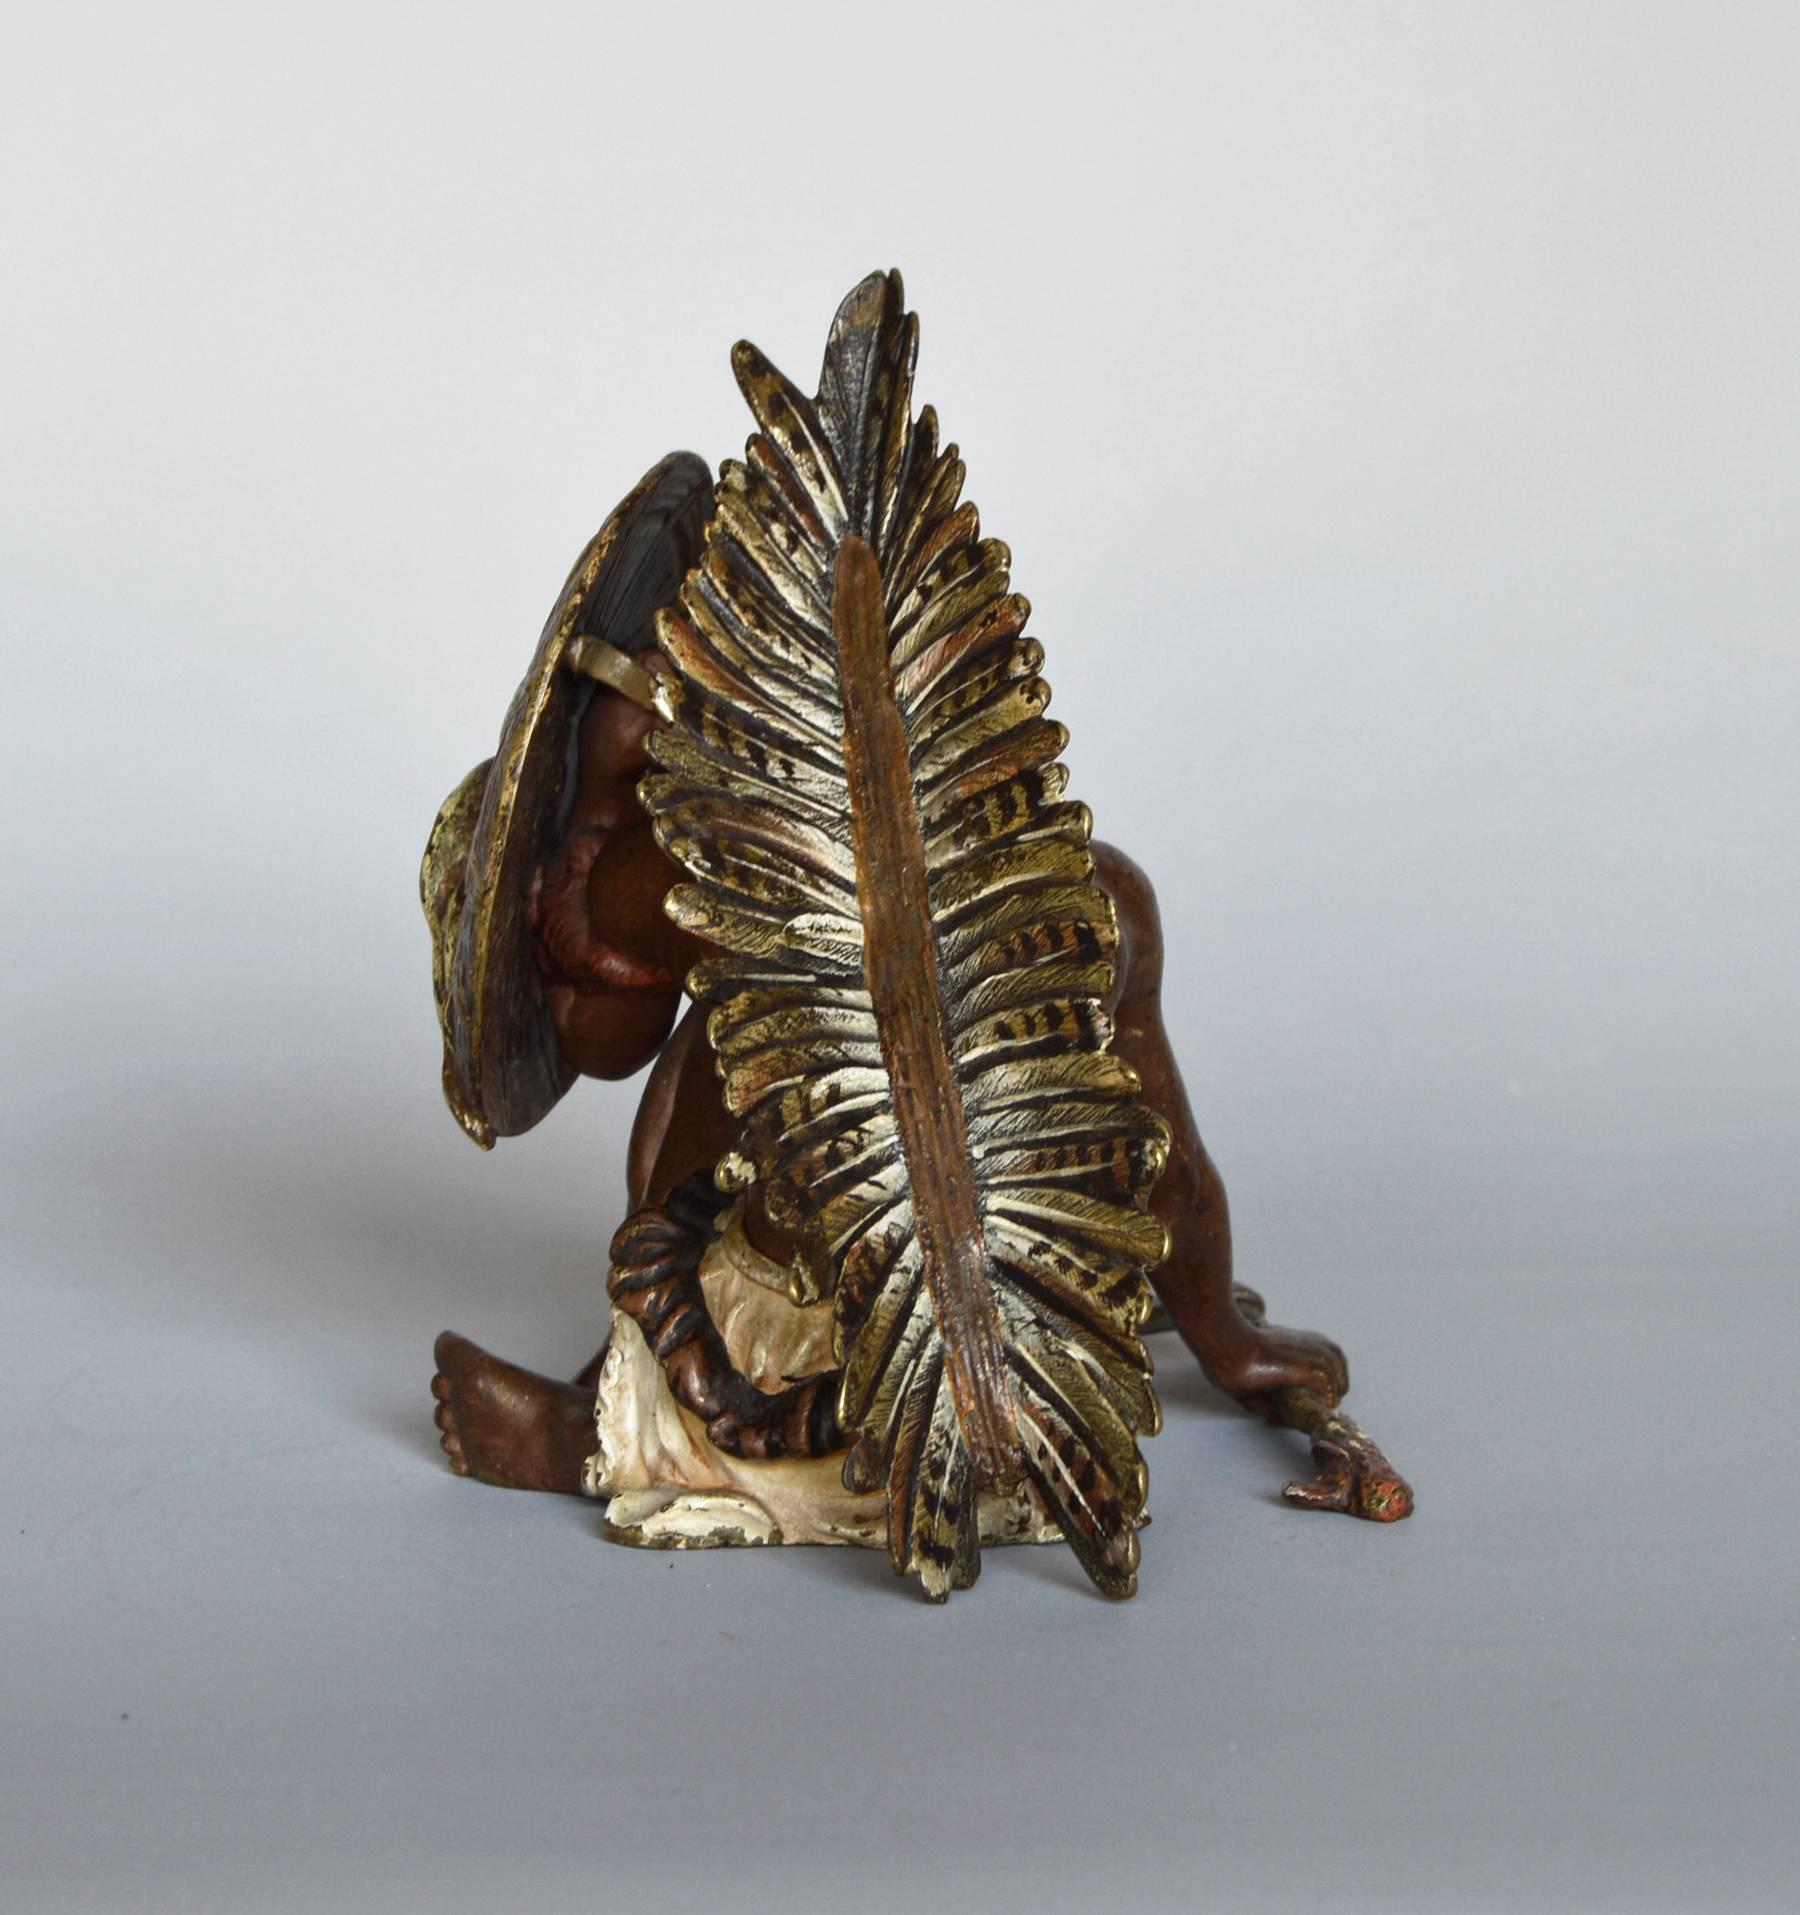 Native American Indian Sitting, bronze sculpture - Victorian Sculpture by Franz Bergmann